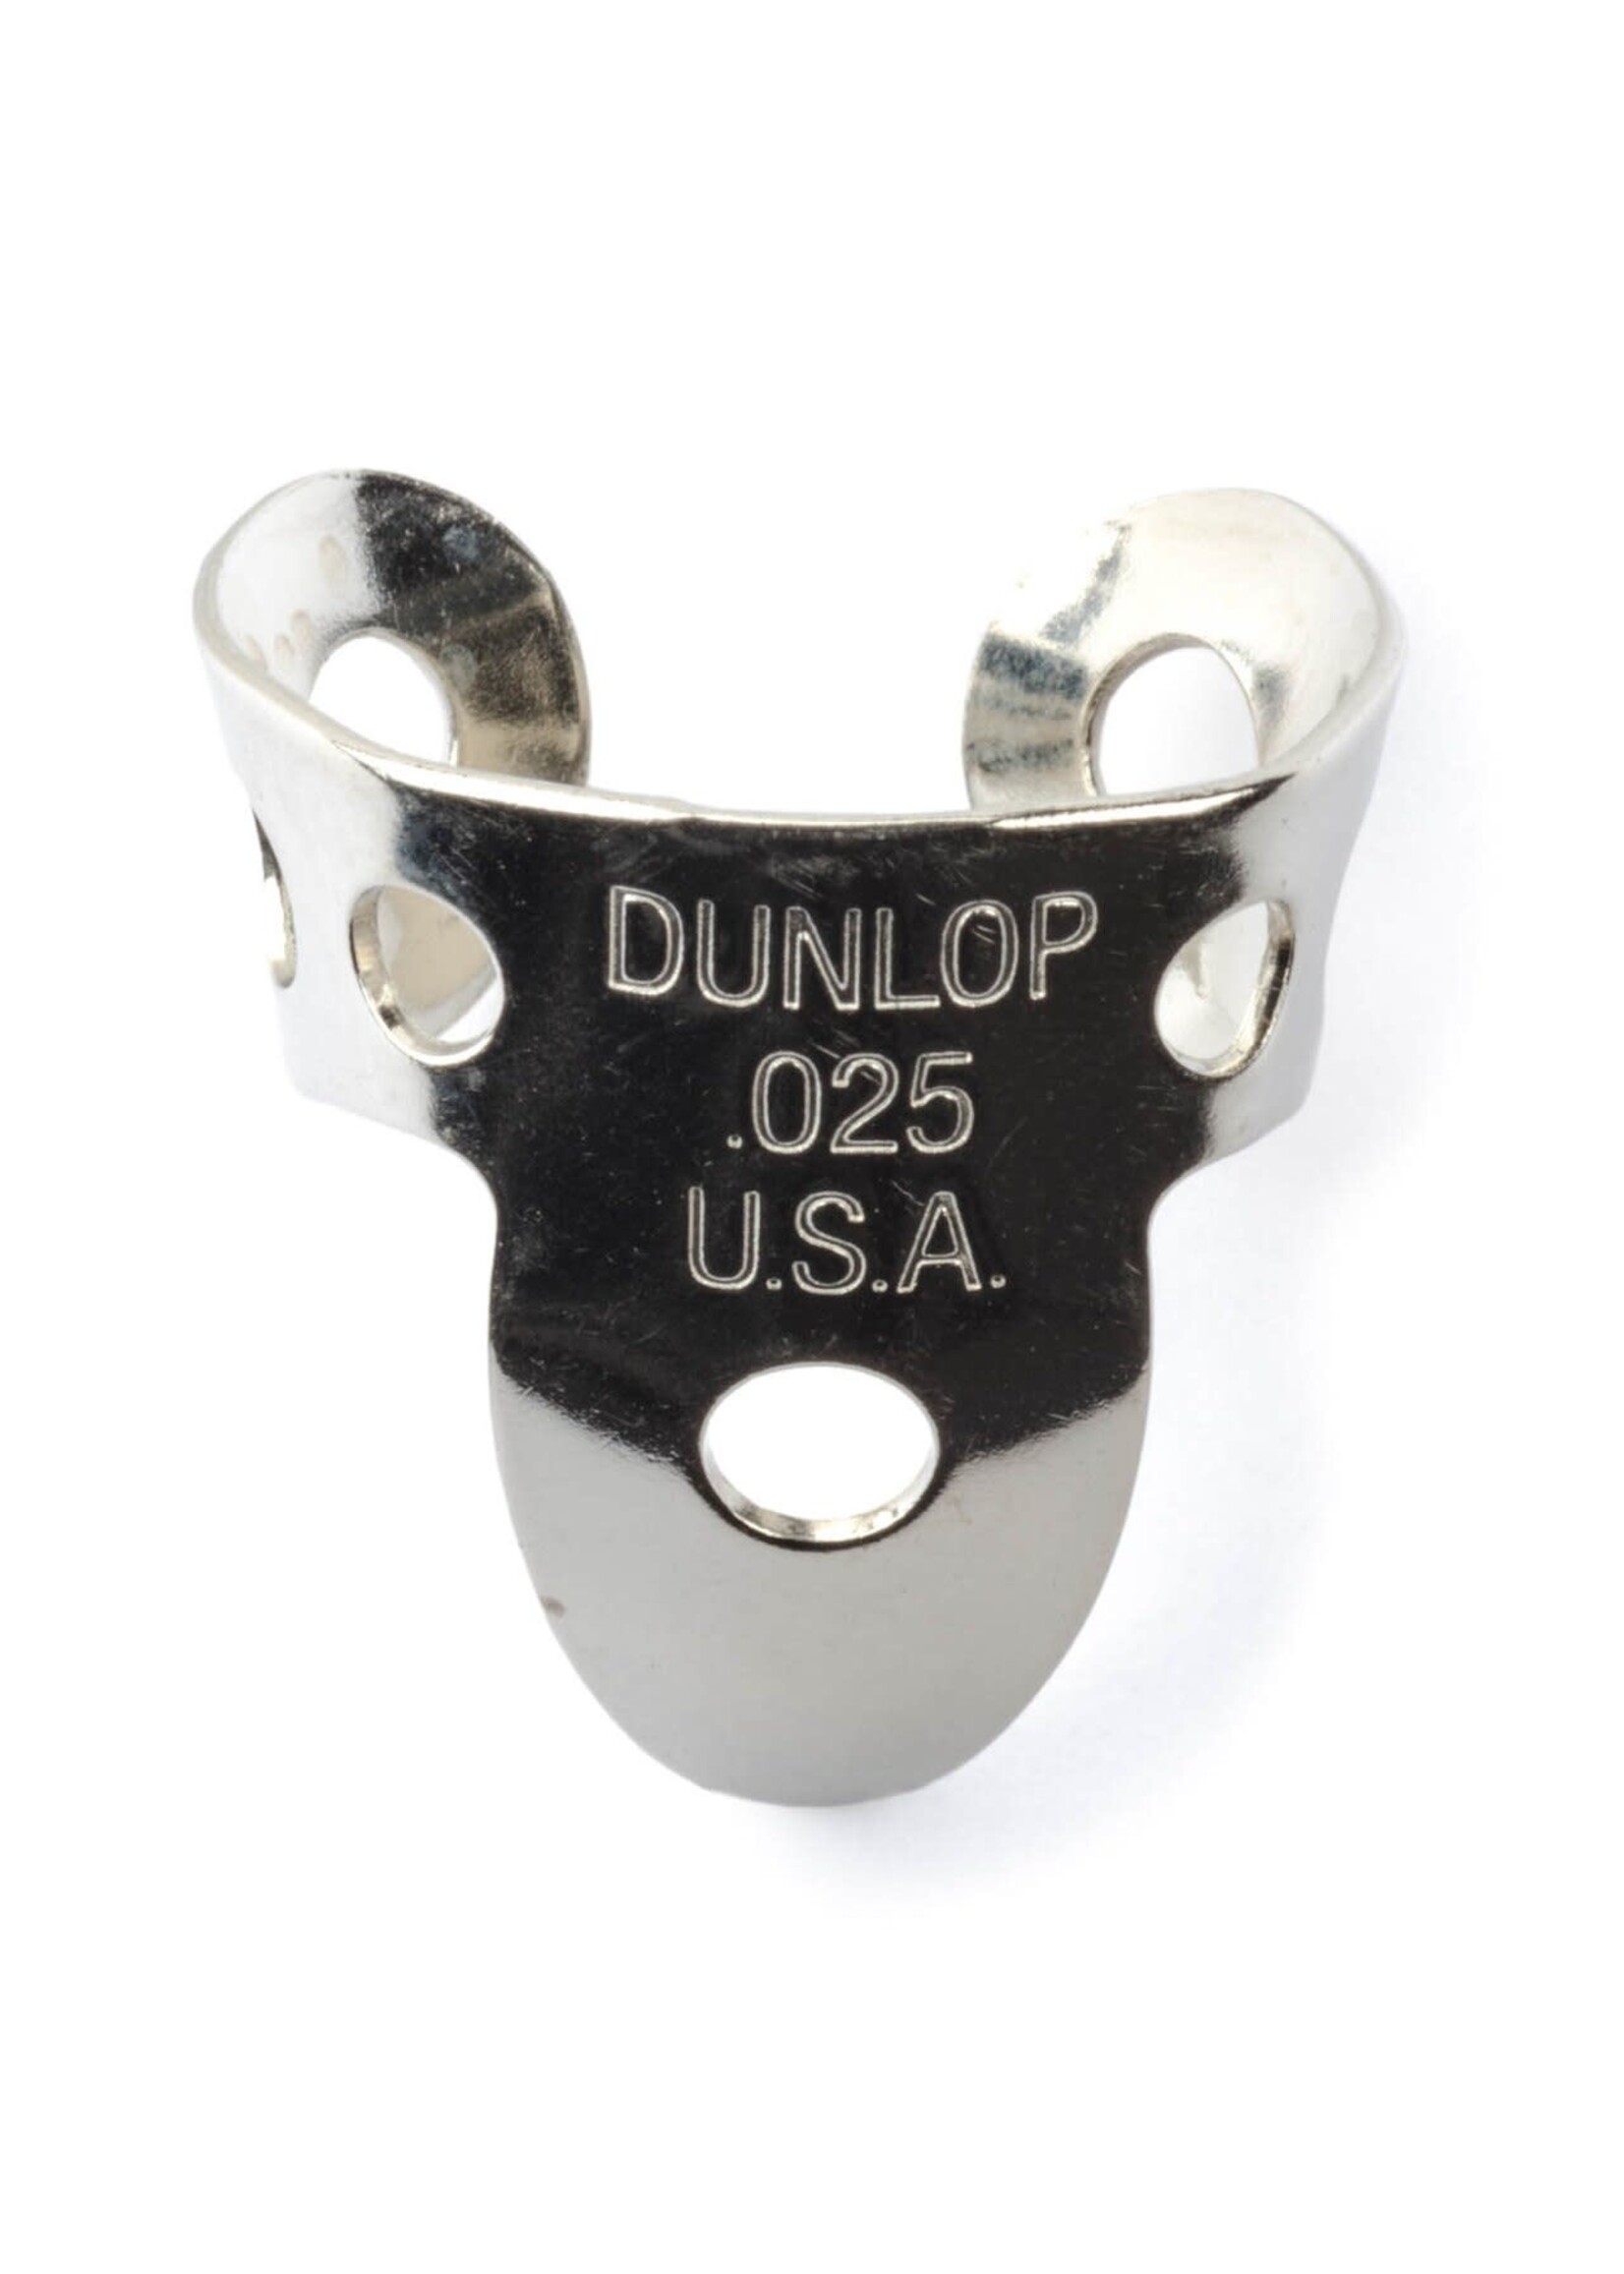 Dunlop Dunlop Nickel Finger and Thumb Picks 5 Pack .025"